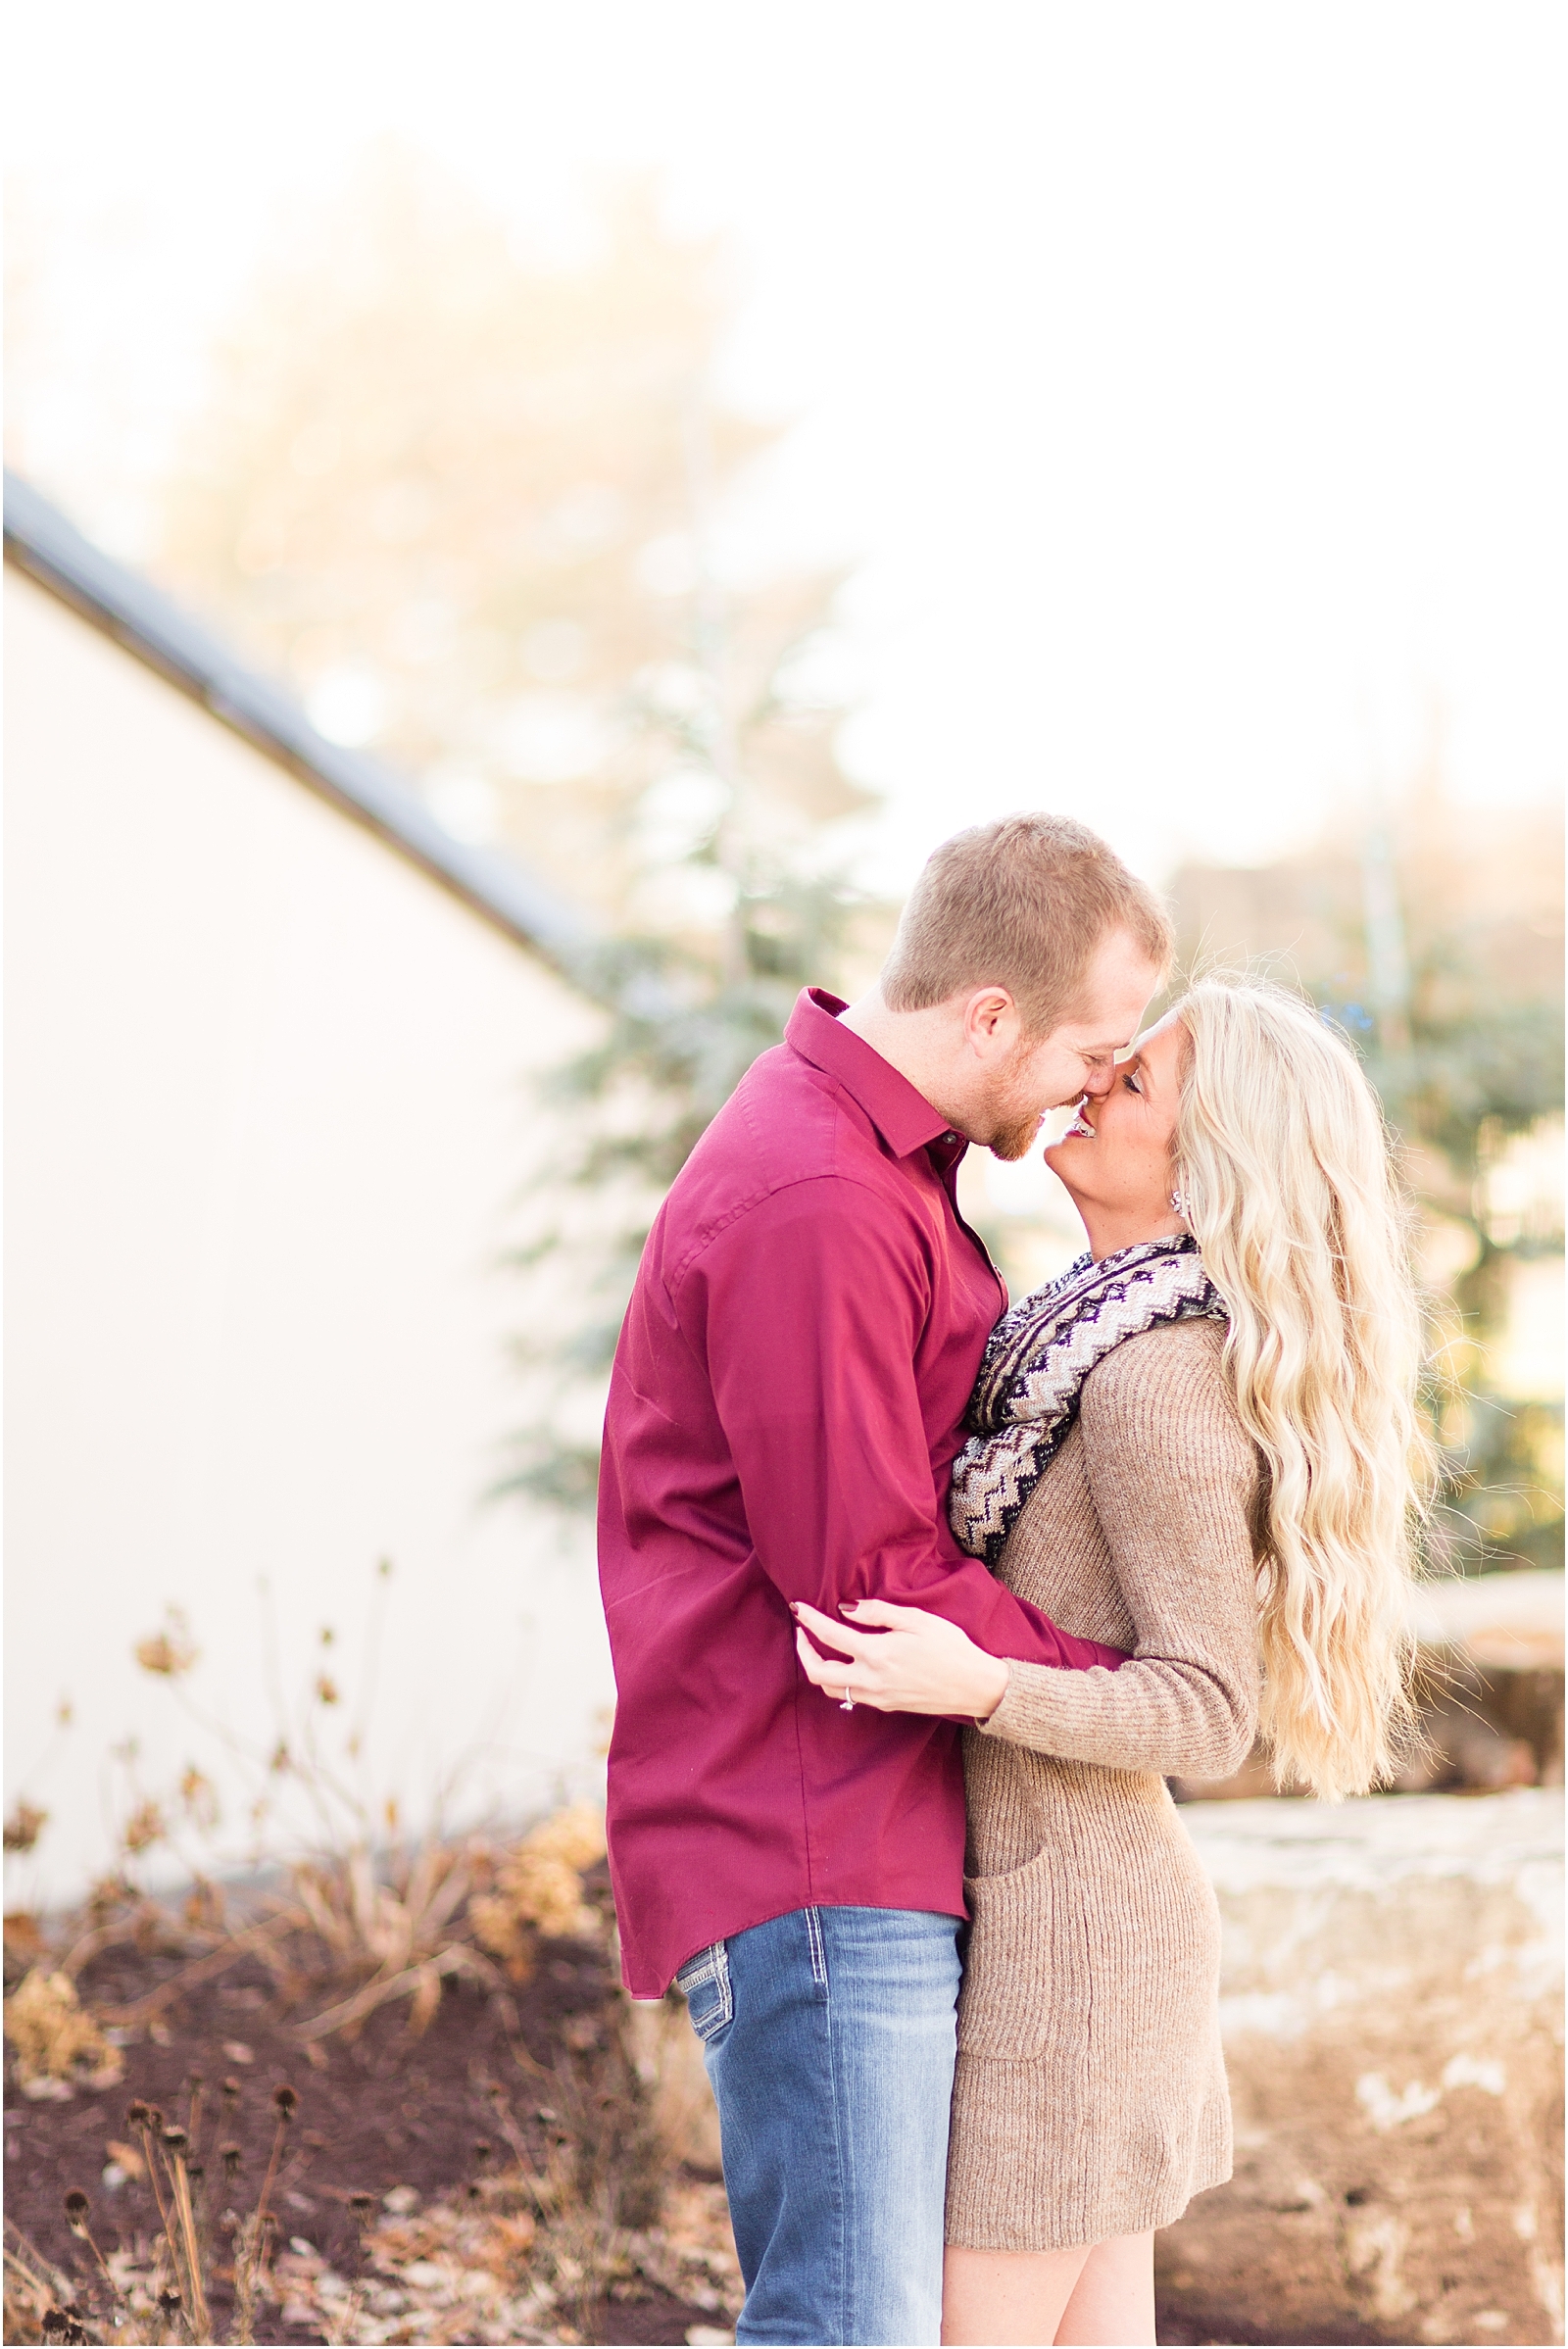 Dana and Blake | Bret and Brandie | Evansville Wedding Photographer0001.jpg